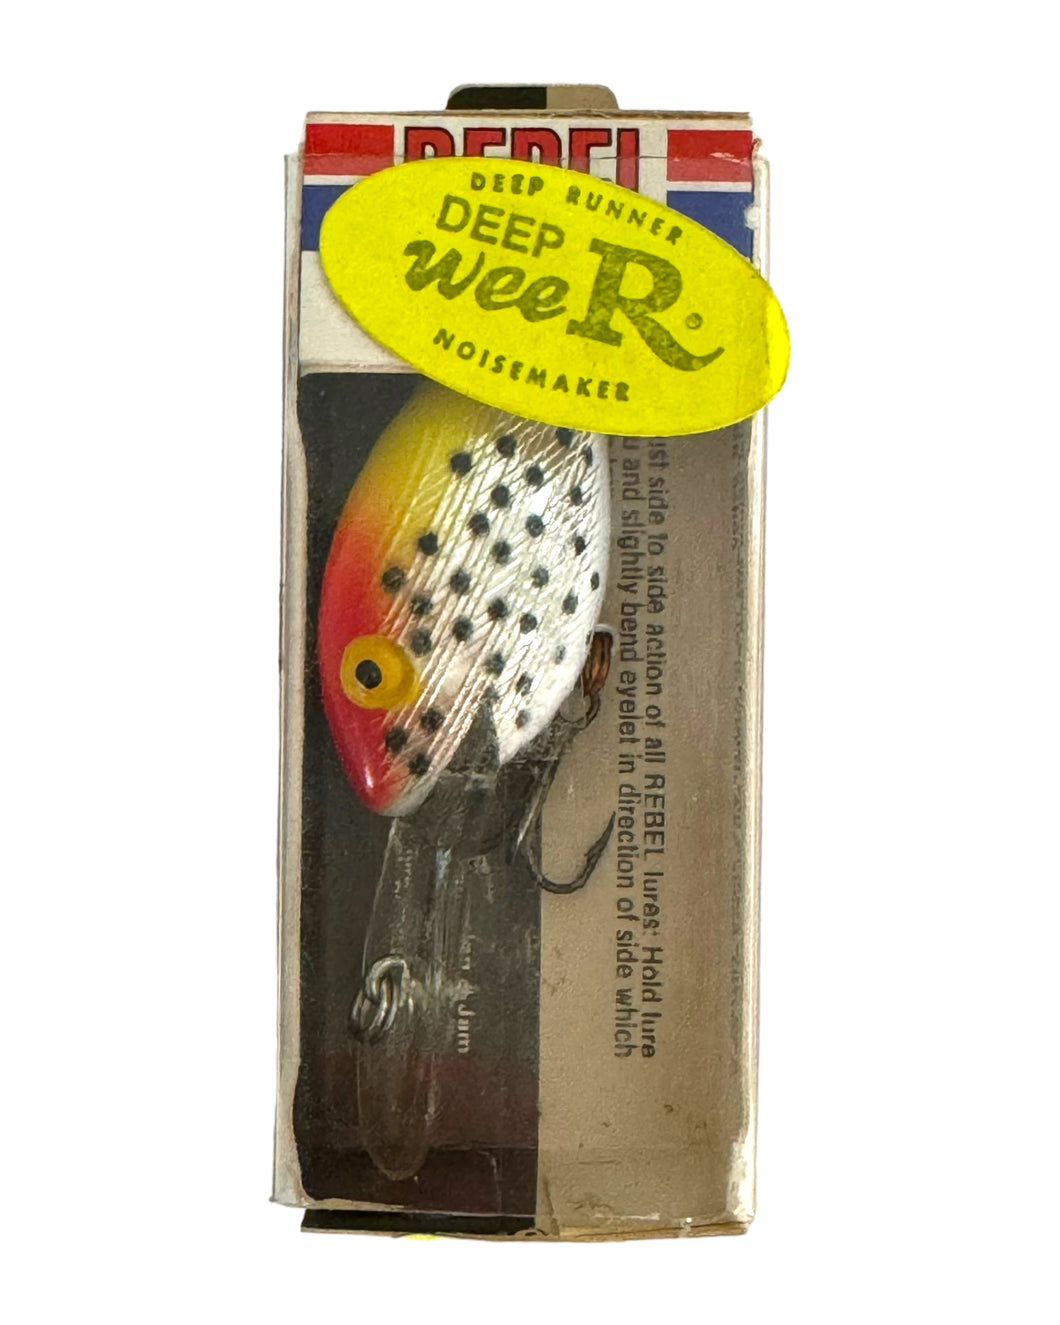 Boxed View of REBEL LURES D9326 DEEP WEE-R Vintage Fishing Lure